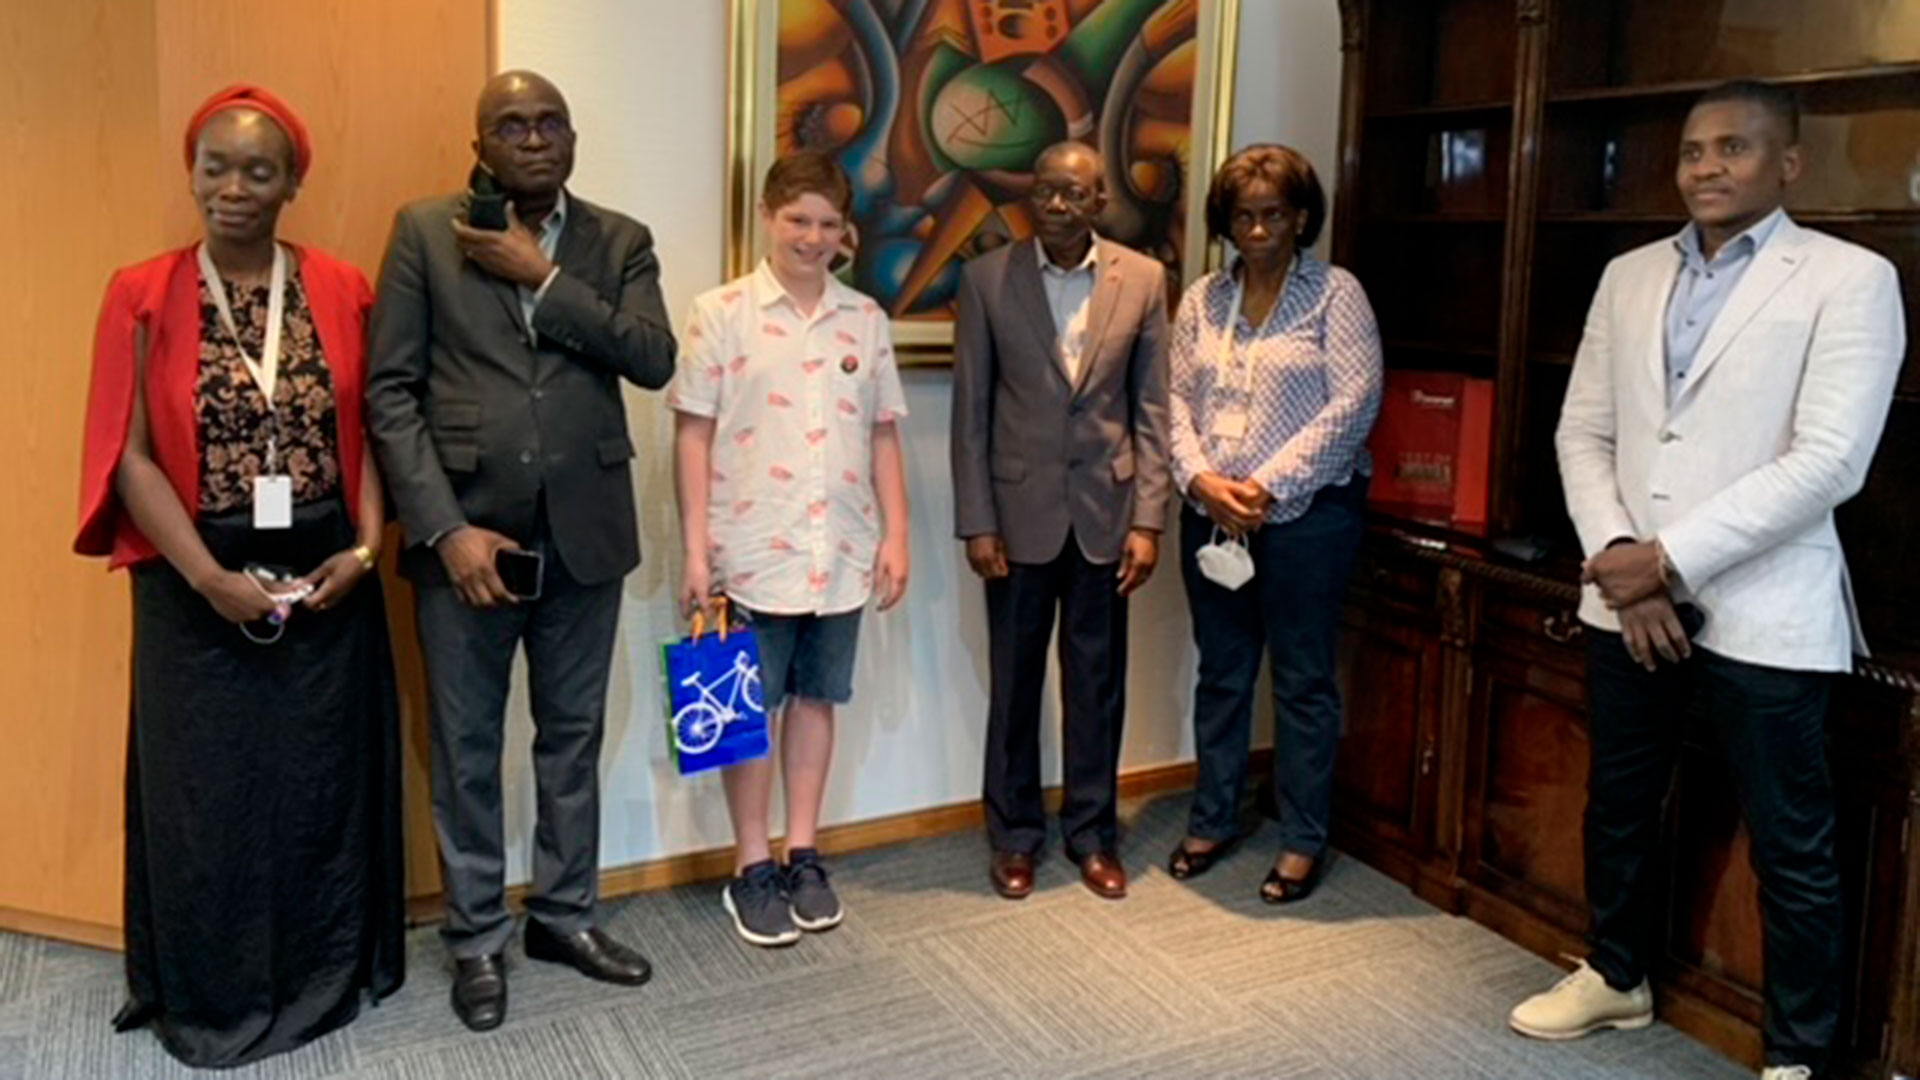 Timoteo, de visita en la embajada de Angola